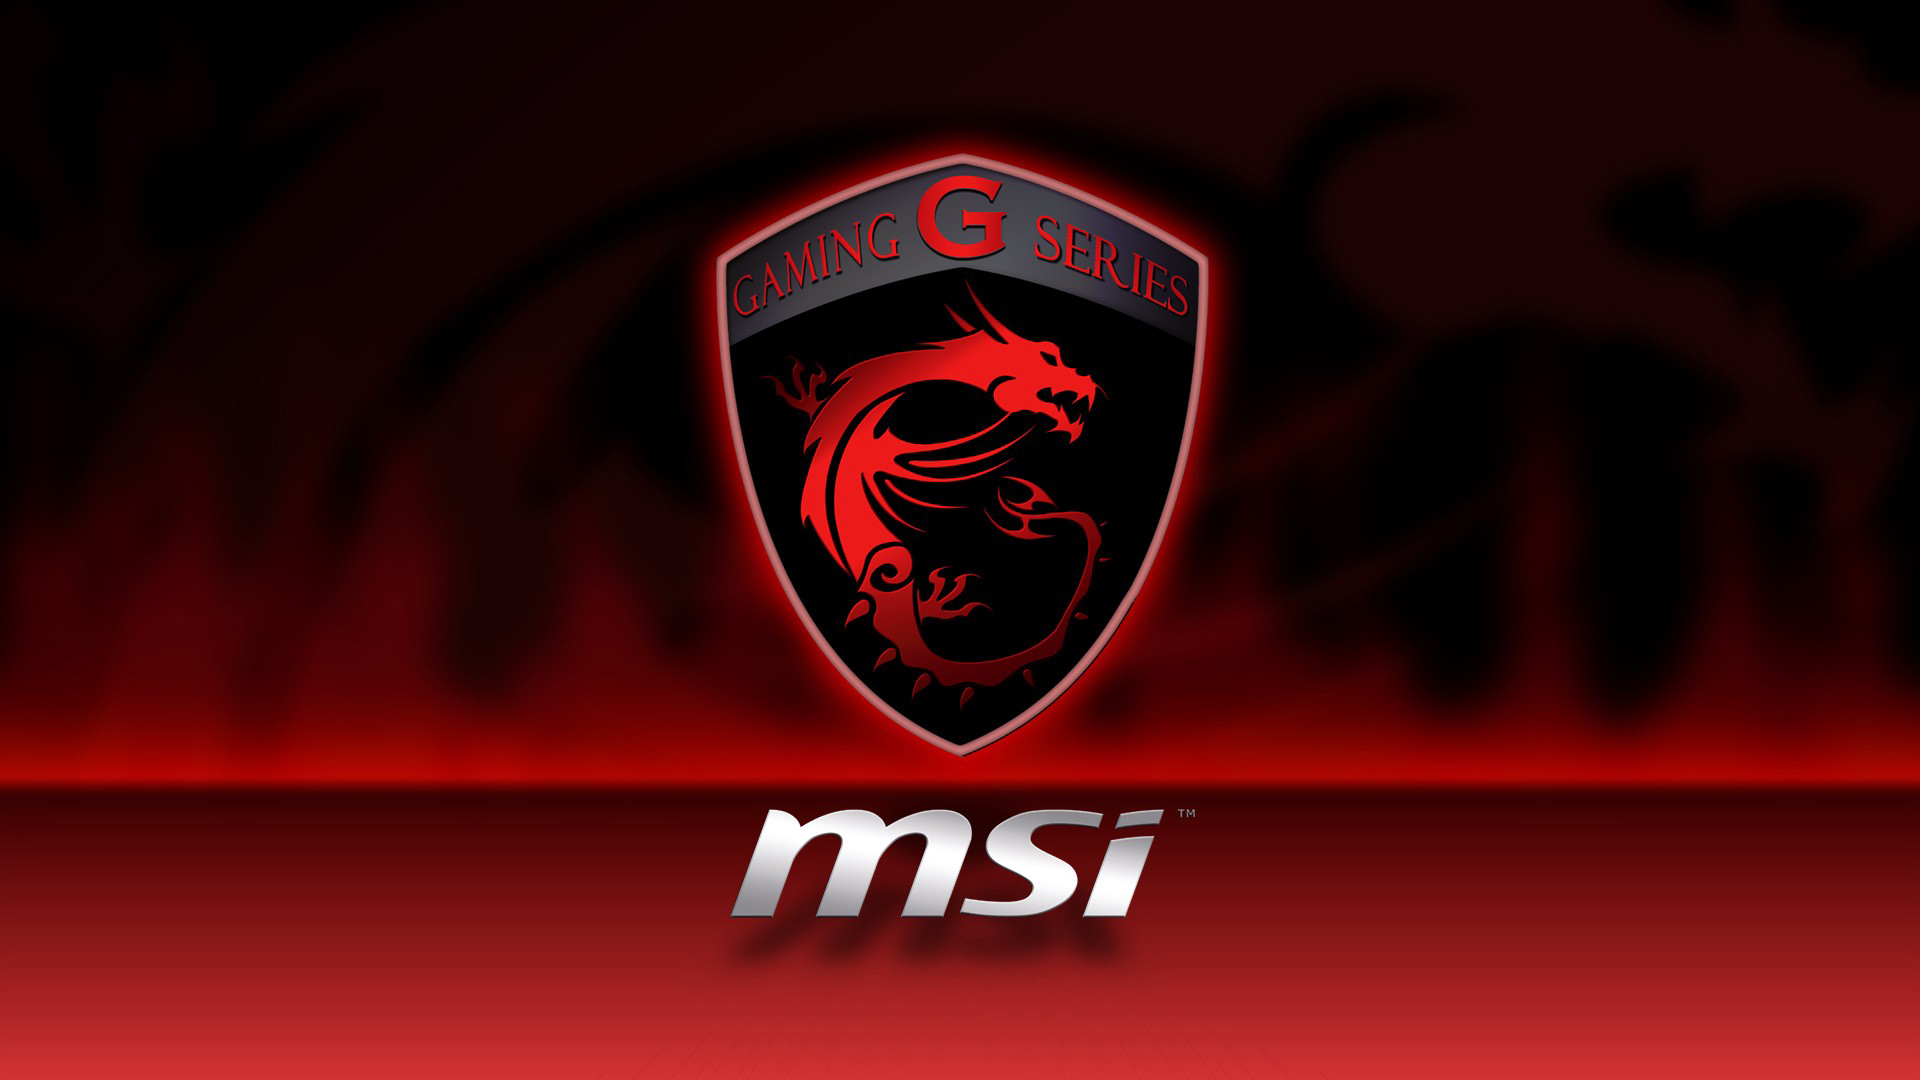 msi gaming g series dragon logo hd 1920x1080 1080p wallpaper 1920x1080